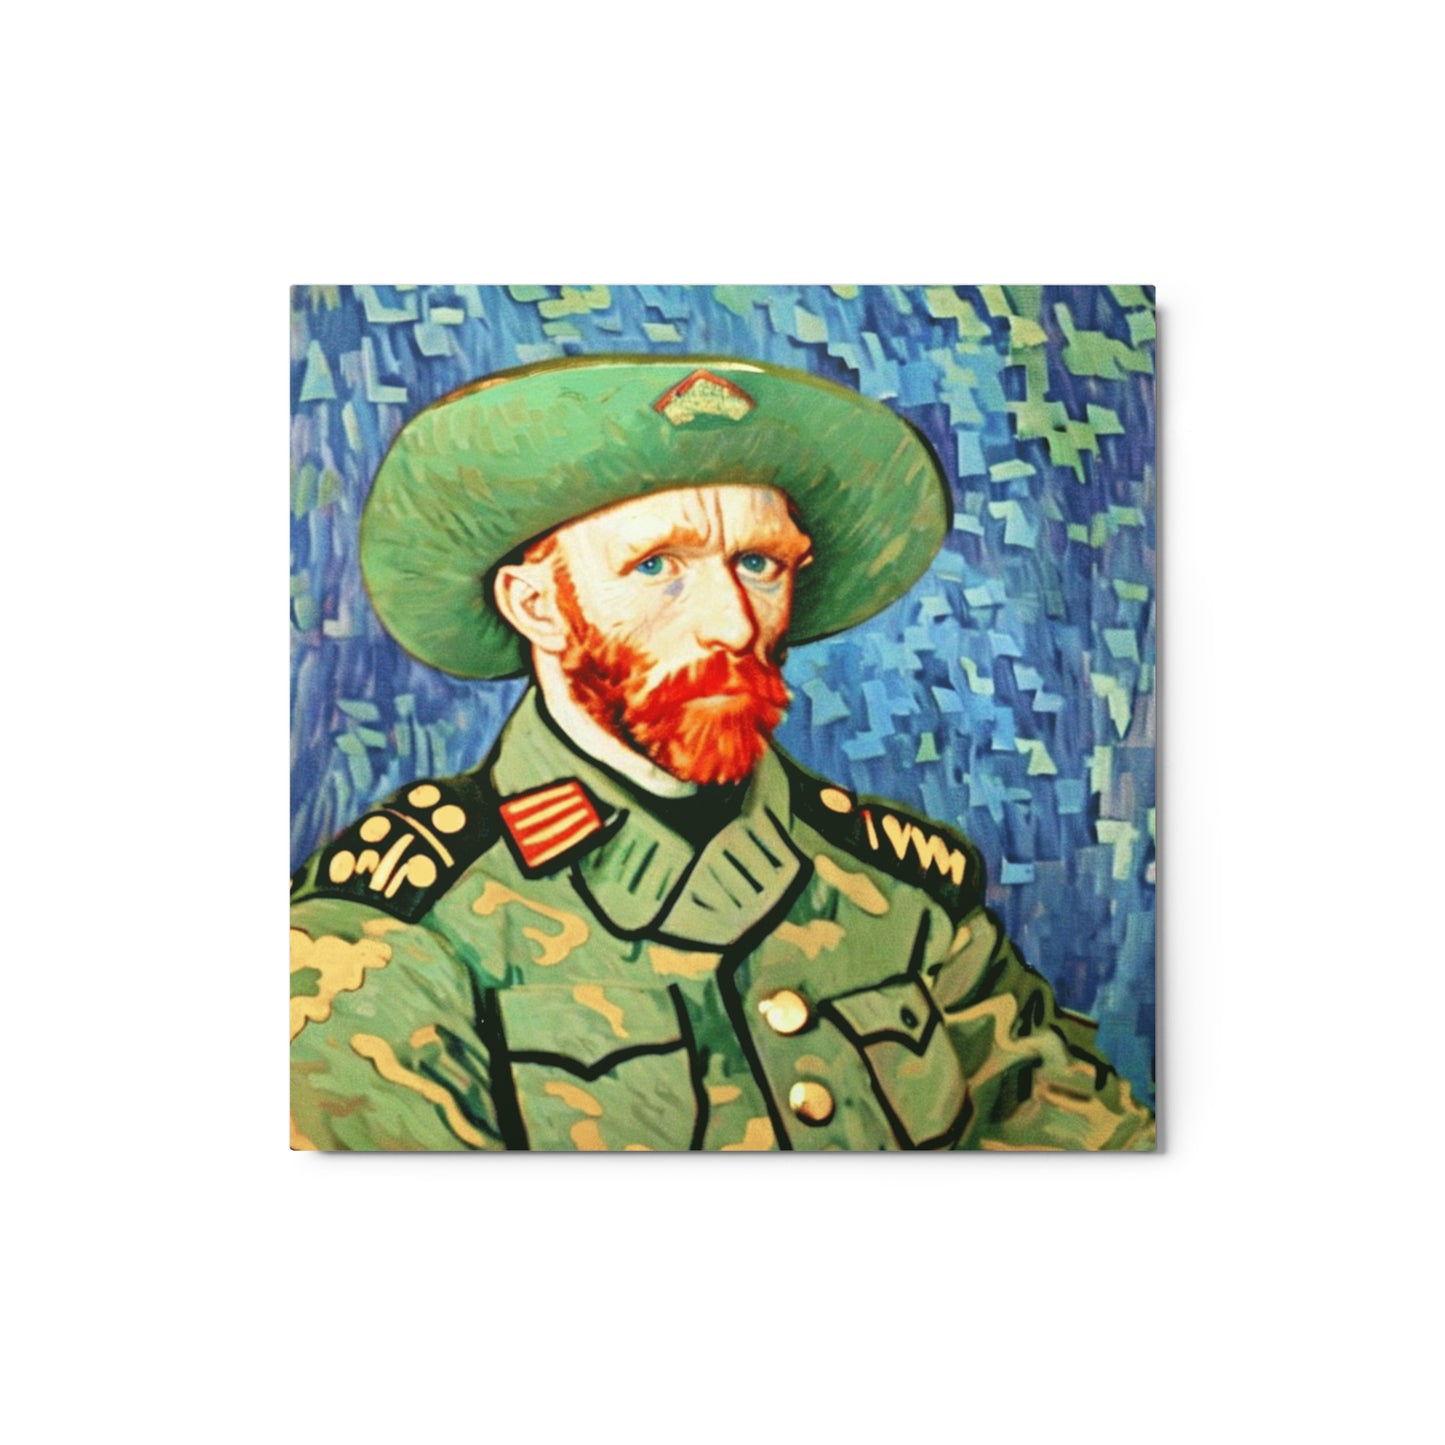 Vincent Van Gogh in Blue Camo - War Metal Wall Art Prints - Army Artists